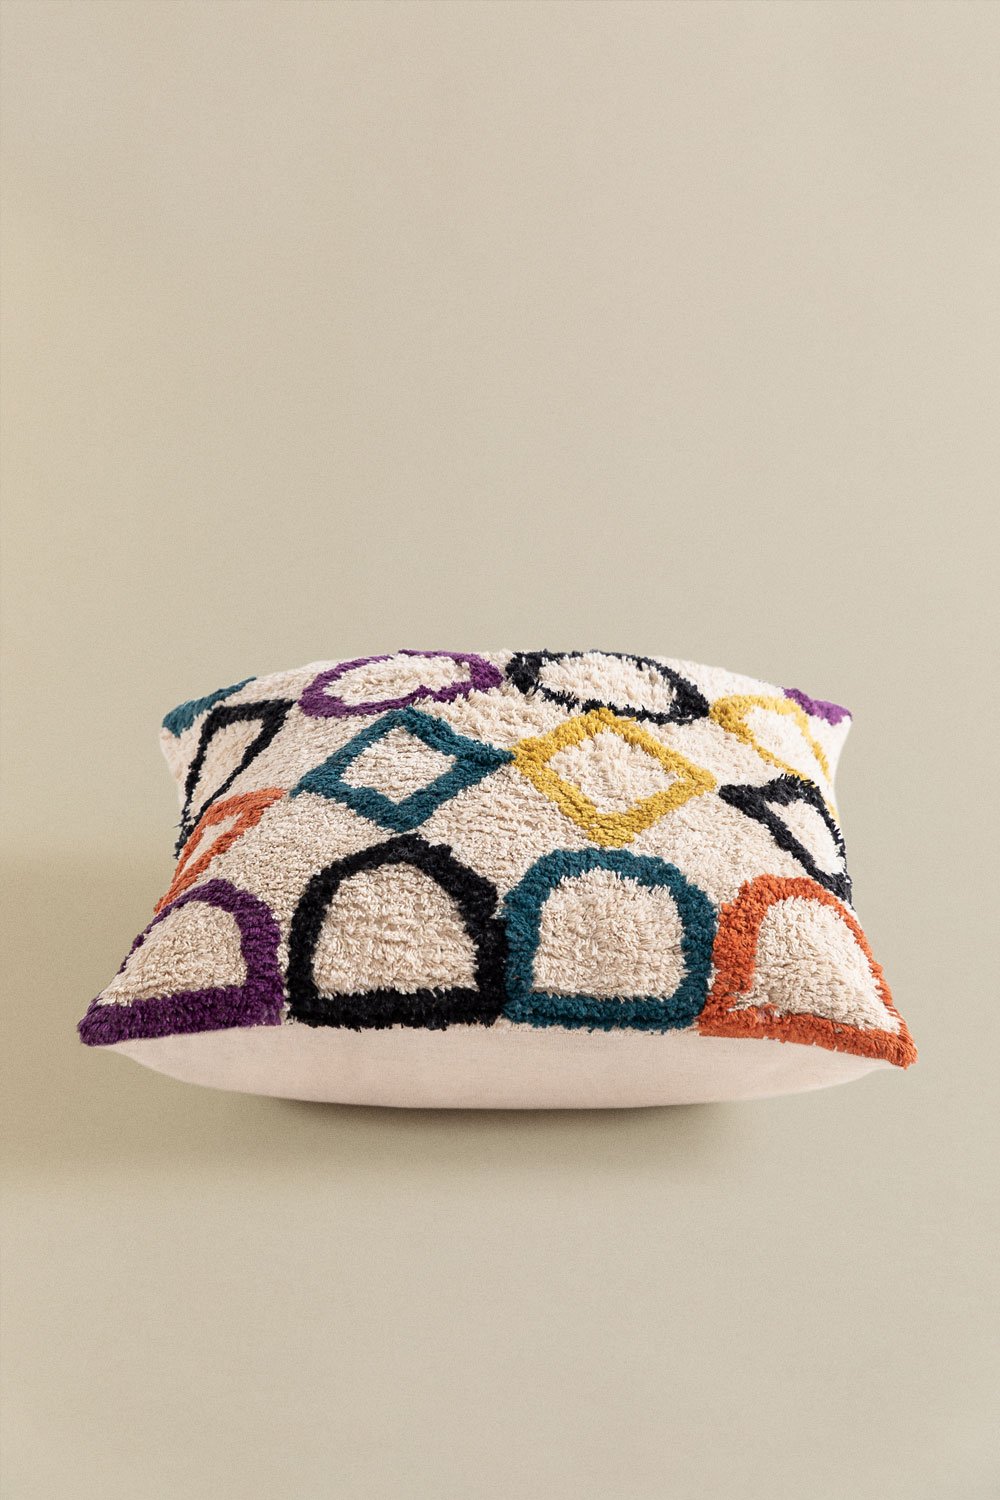 Square Cotton Cushion (43 x 43 cm) Plui, gallery image 2